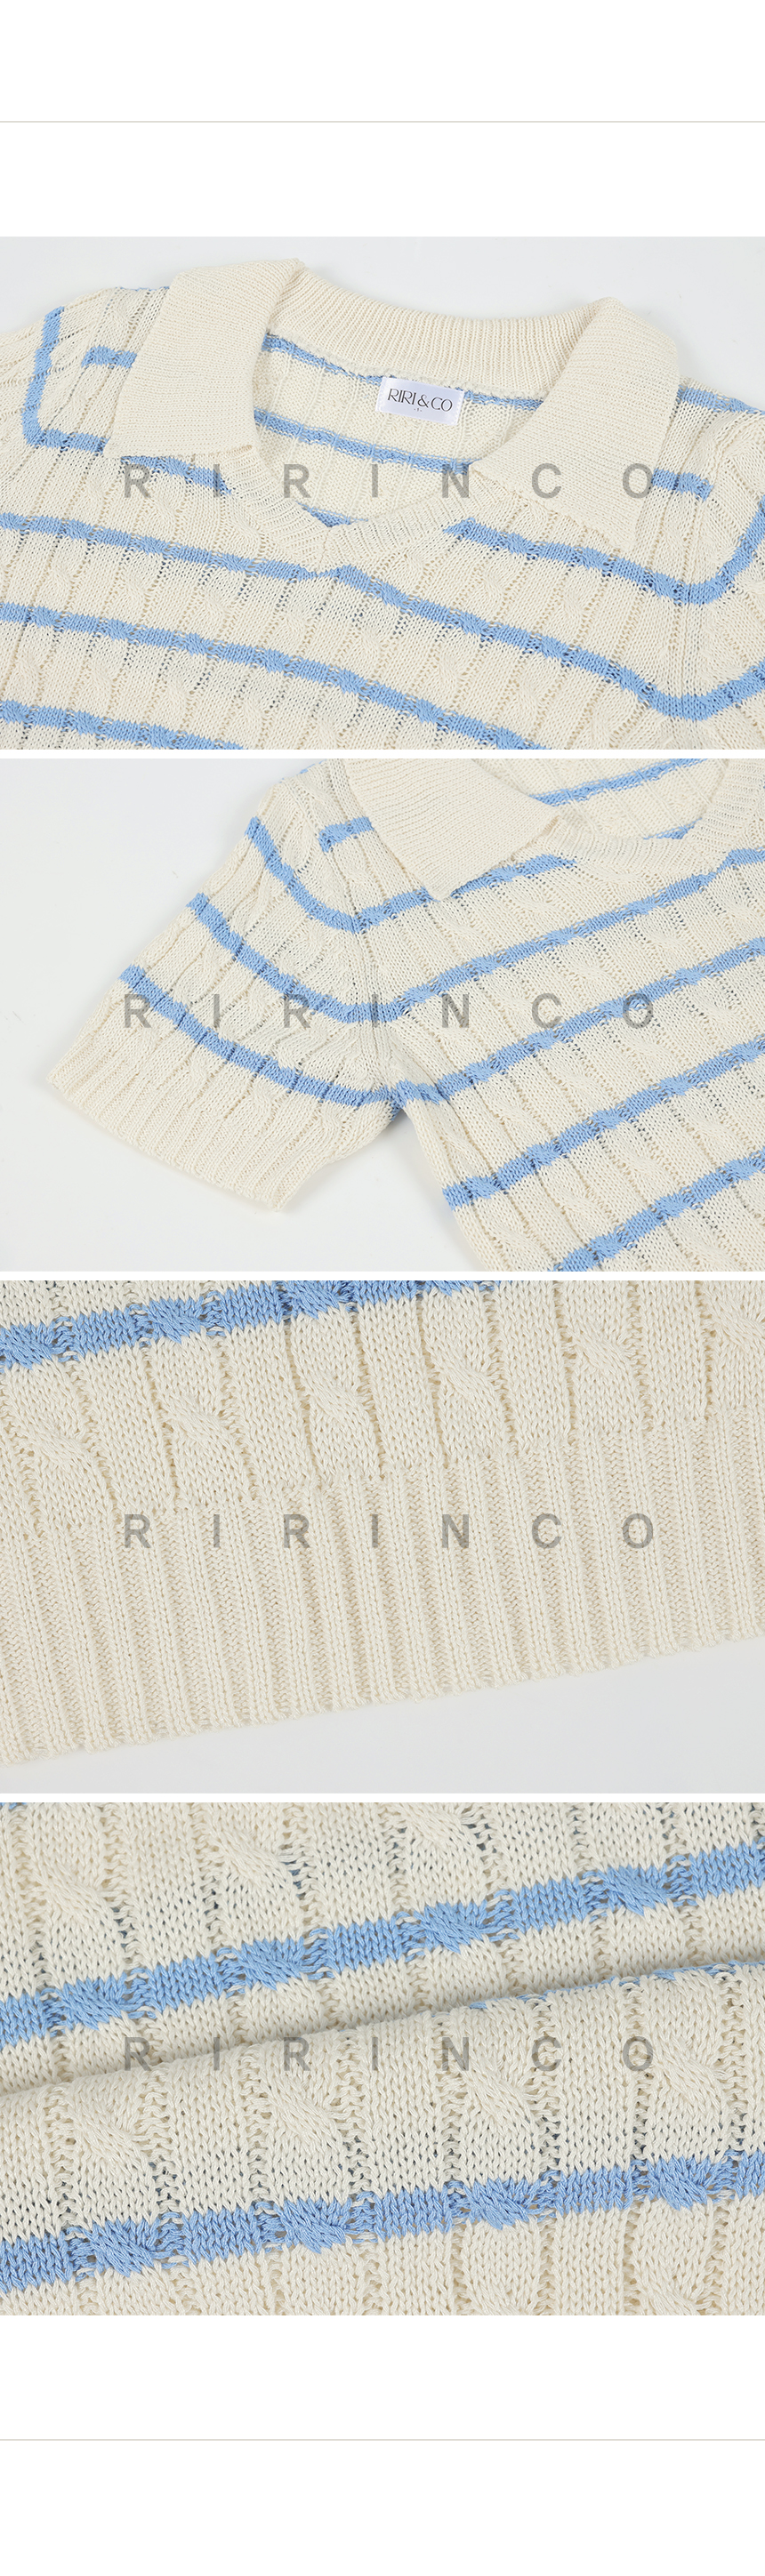 RIRINCO オープンカラー配色サマーニット